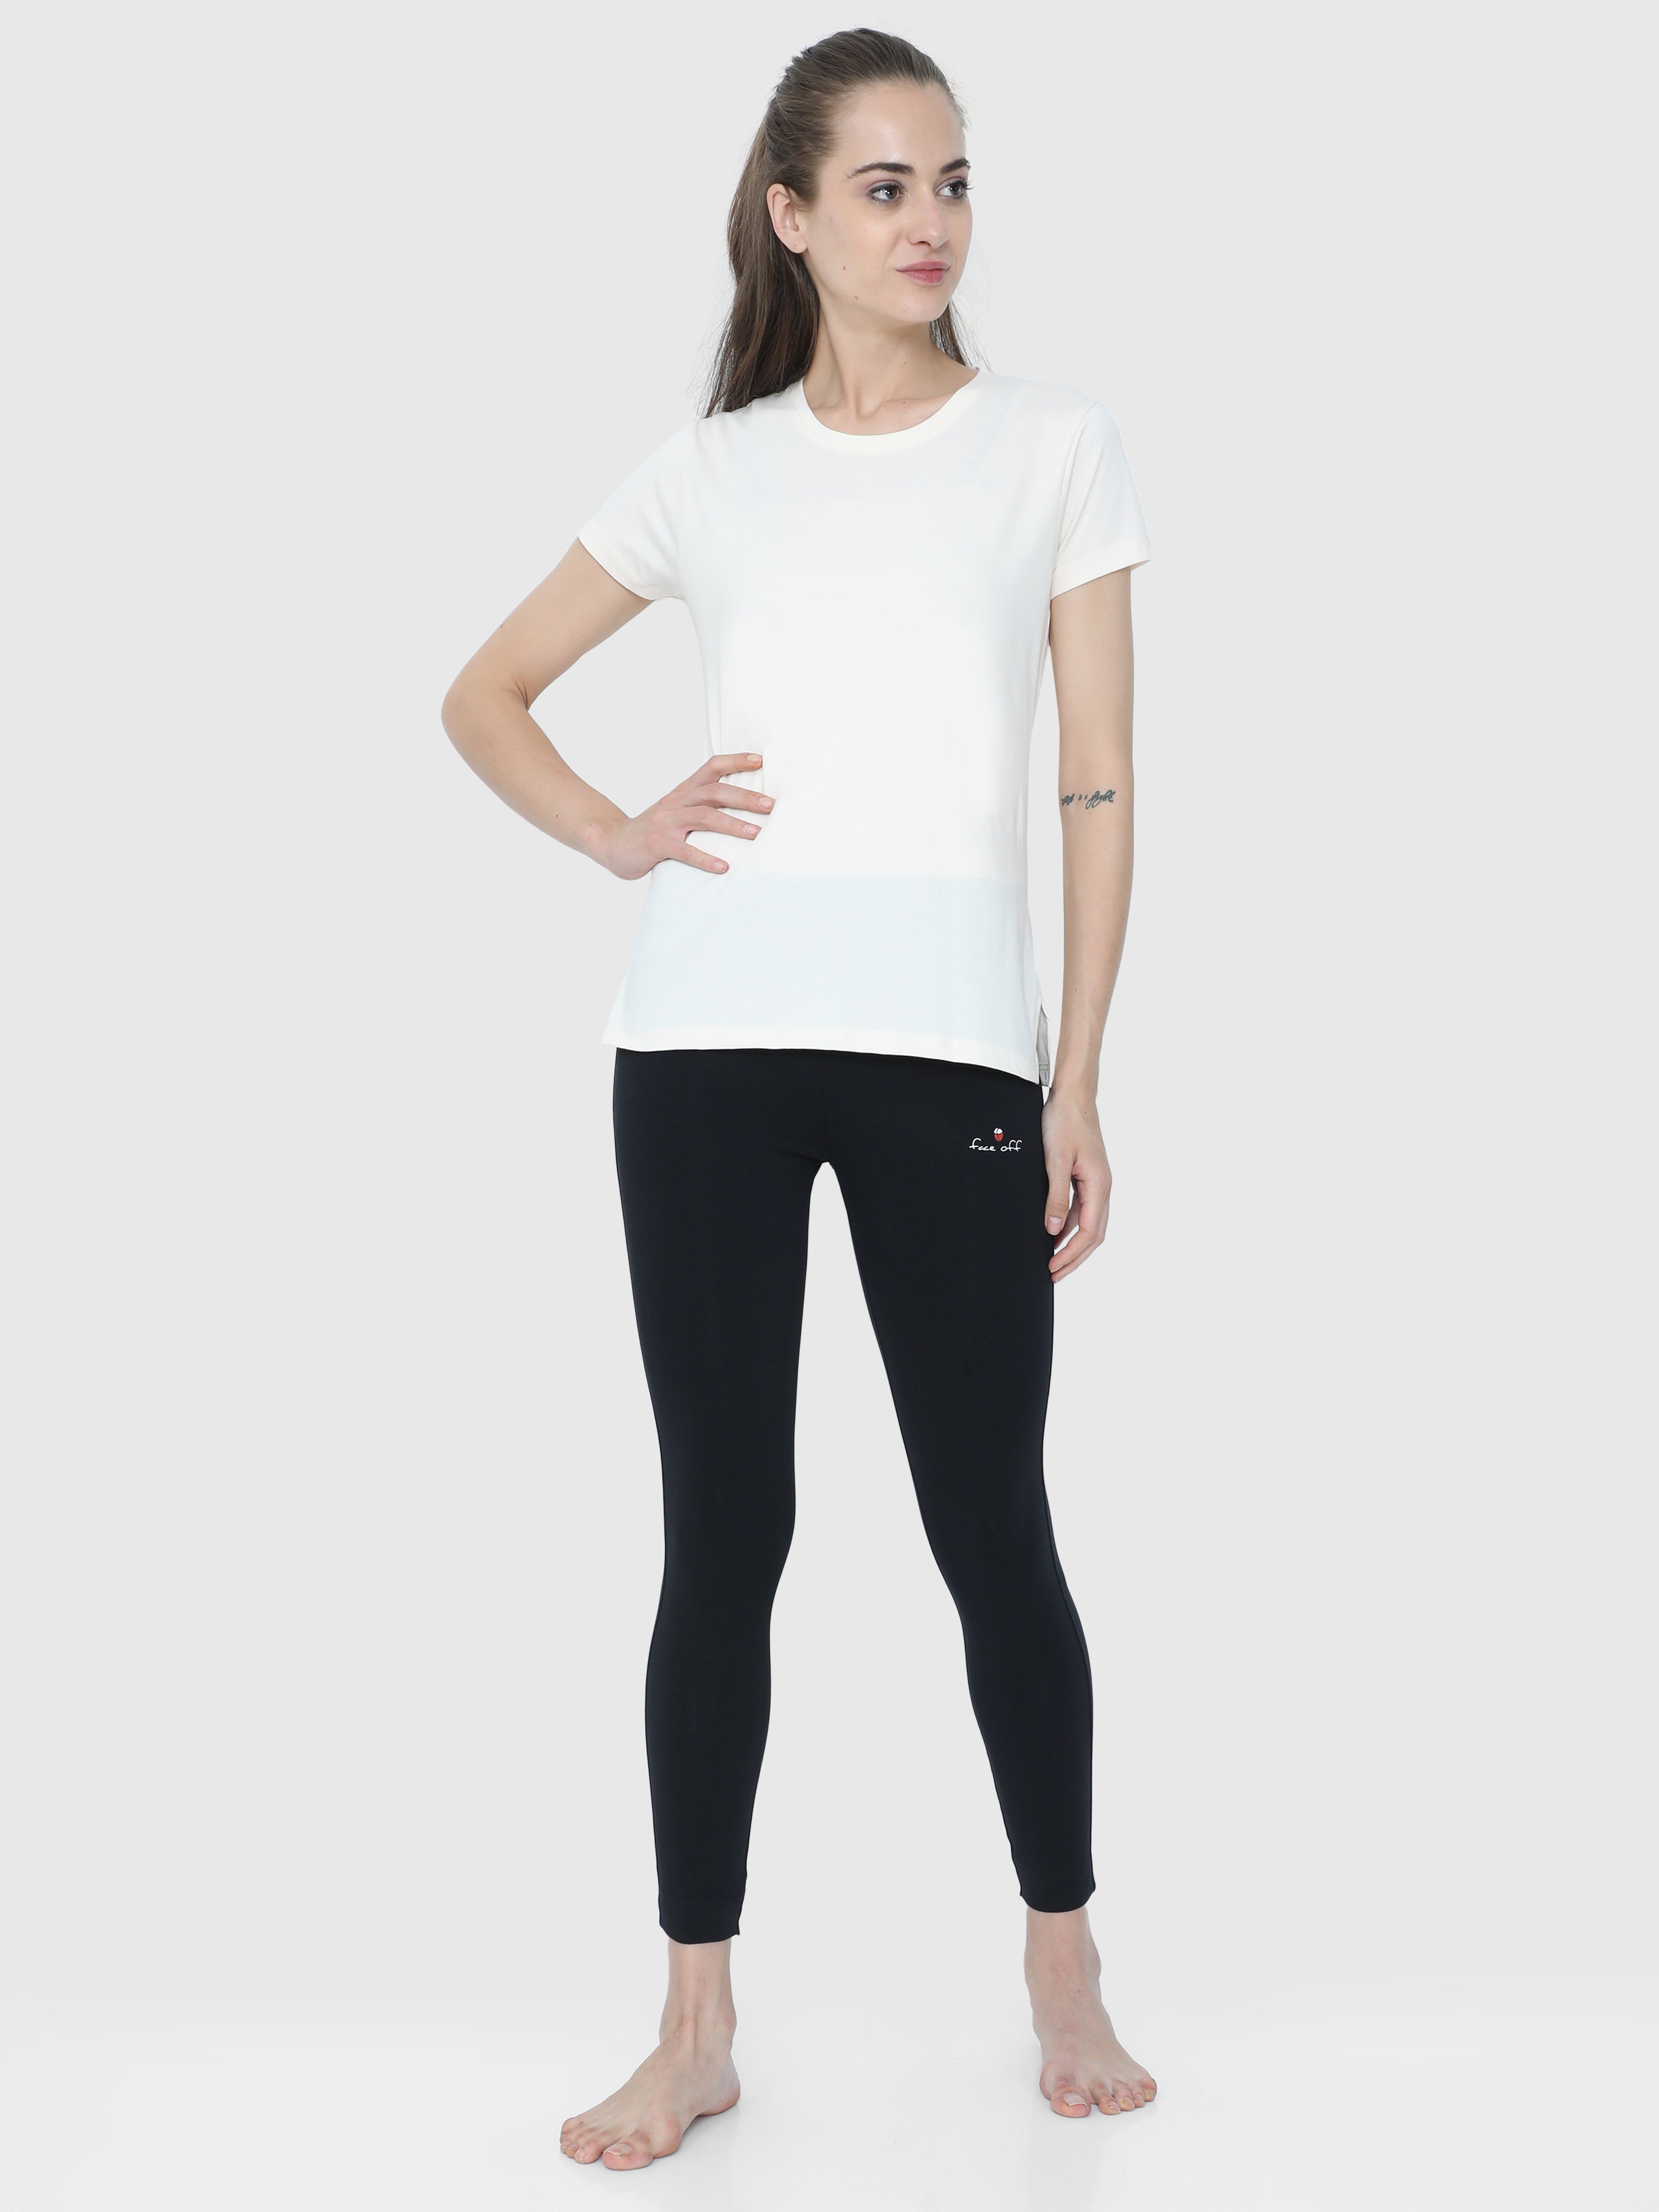 Lisa2 High-Waisted Legging | Sustainable, Canadian Made Clothing – Miik